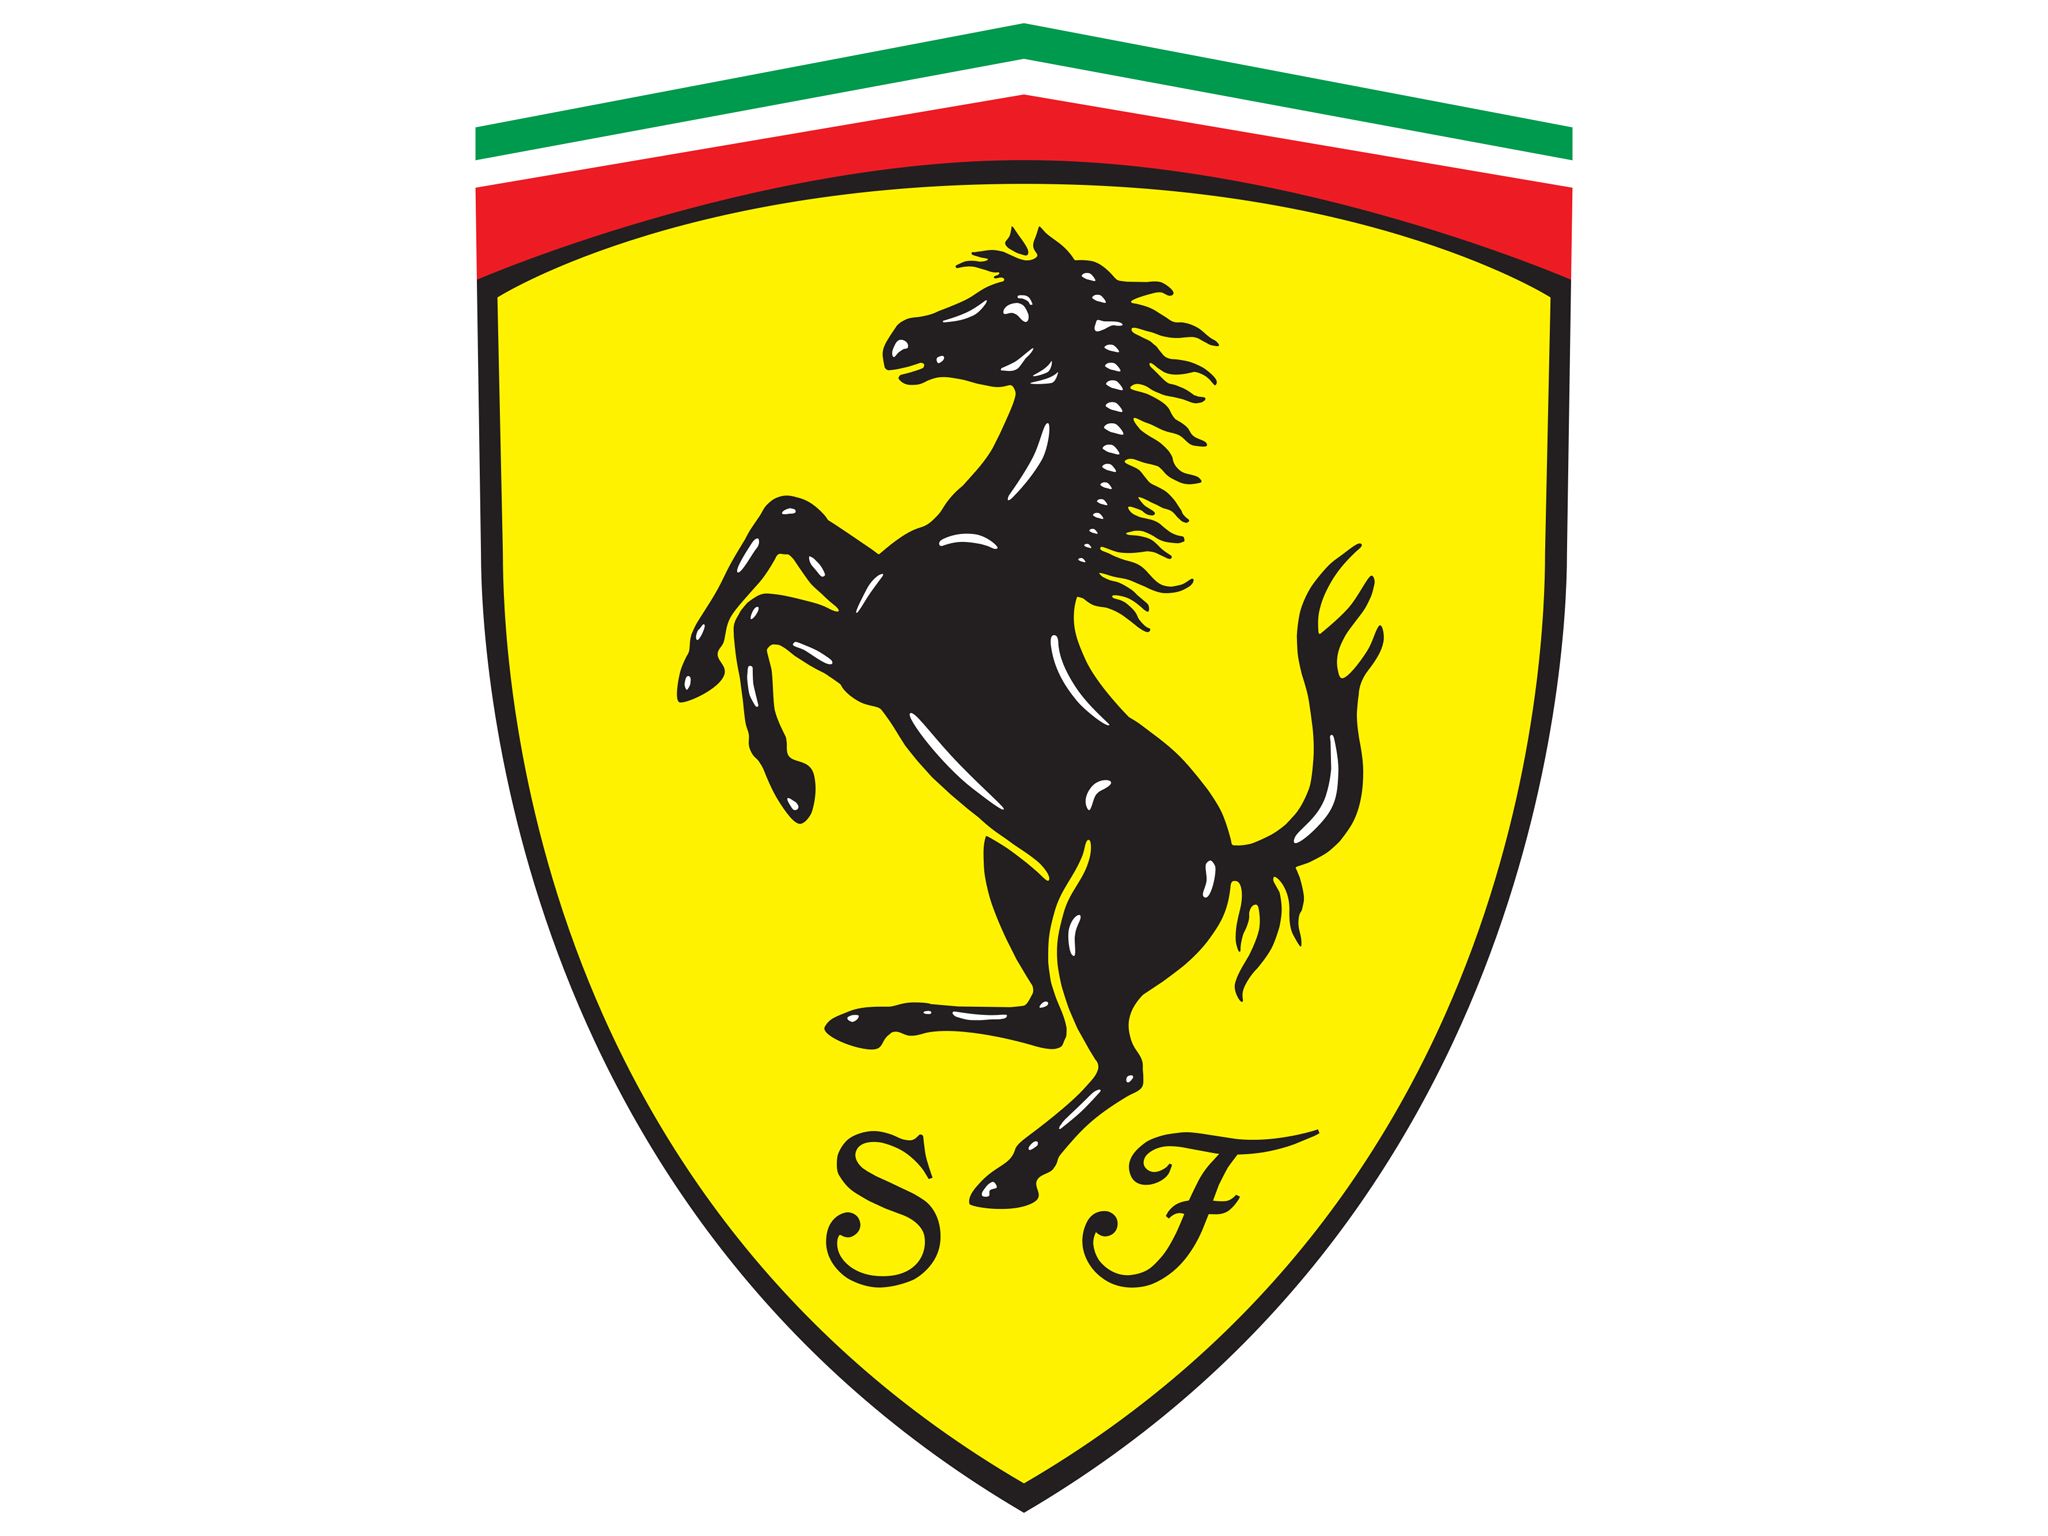 Ferrari Logo wallpaper downloads High resolution images for 2048x1536